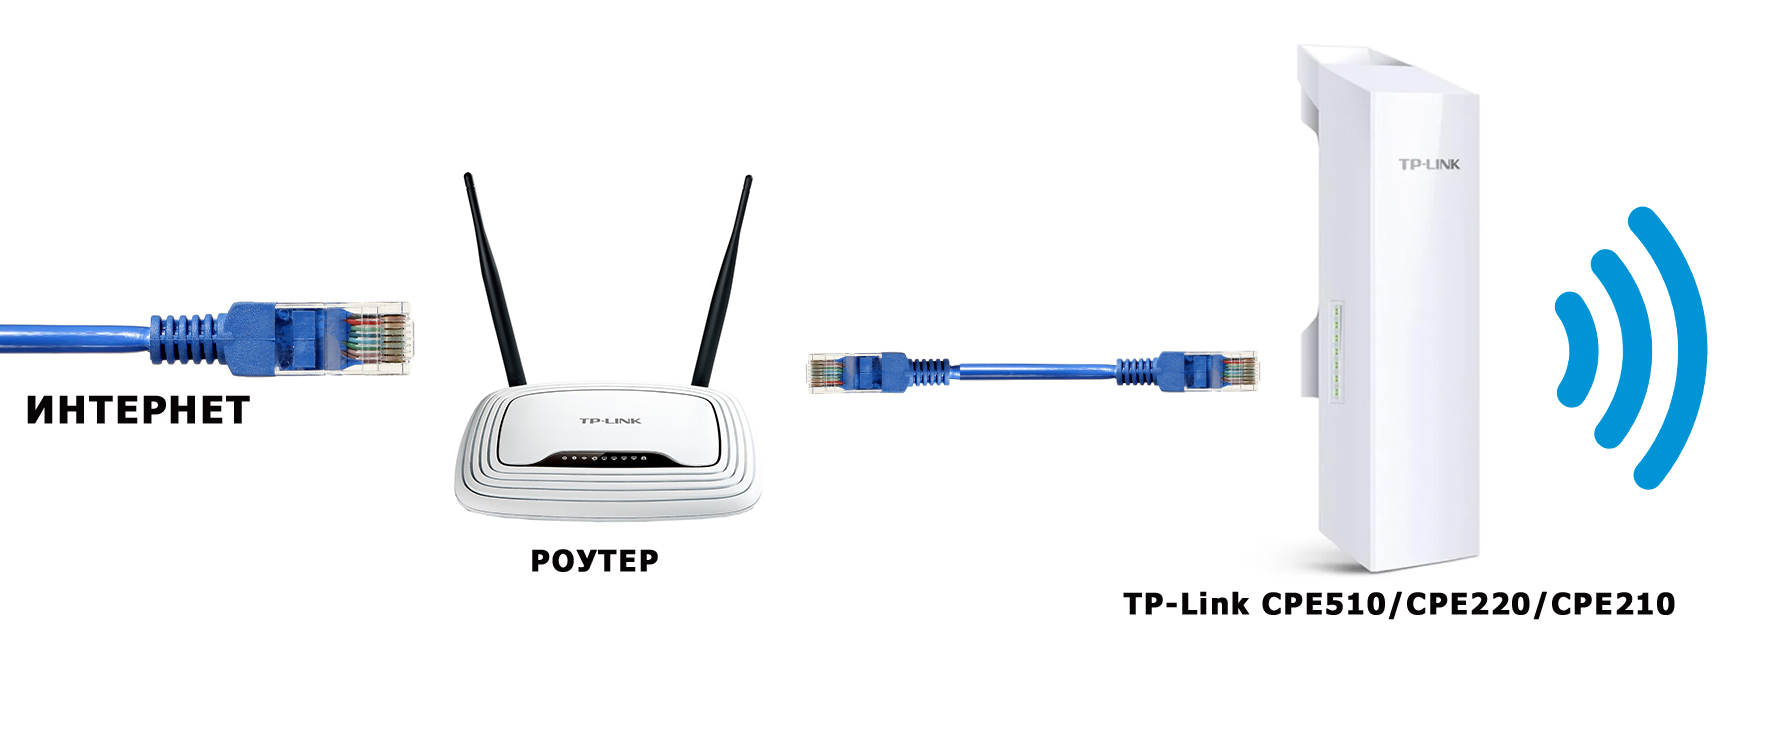 Обзор и настройка точек доступа TP-Link CPE510 (CPE520/CPE220/CPE210)